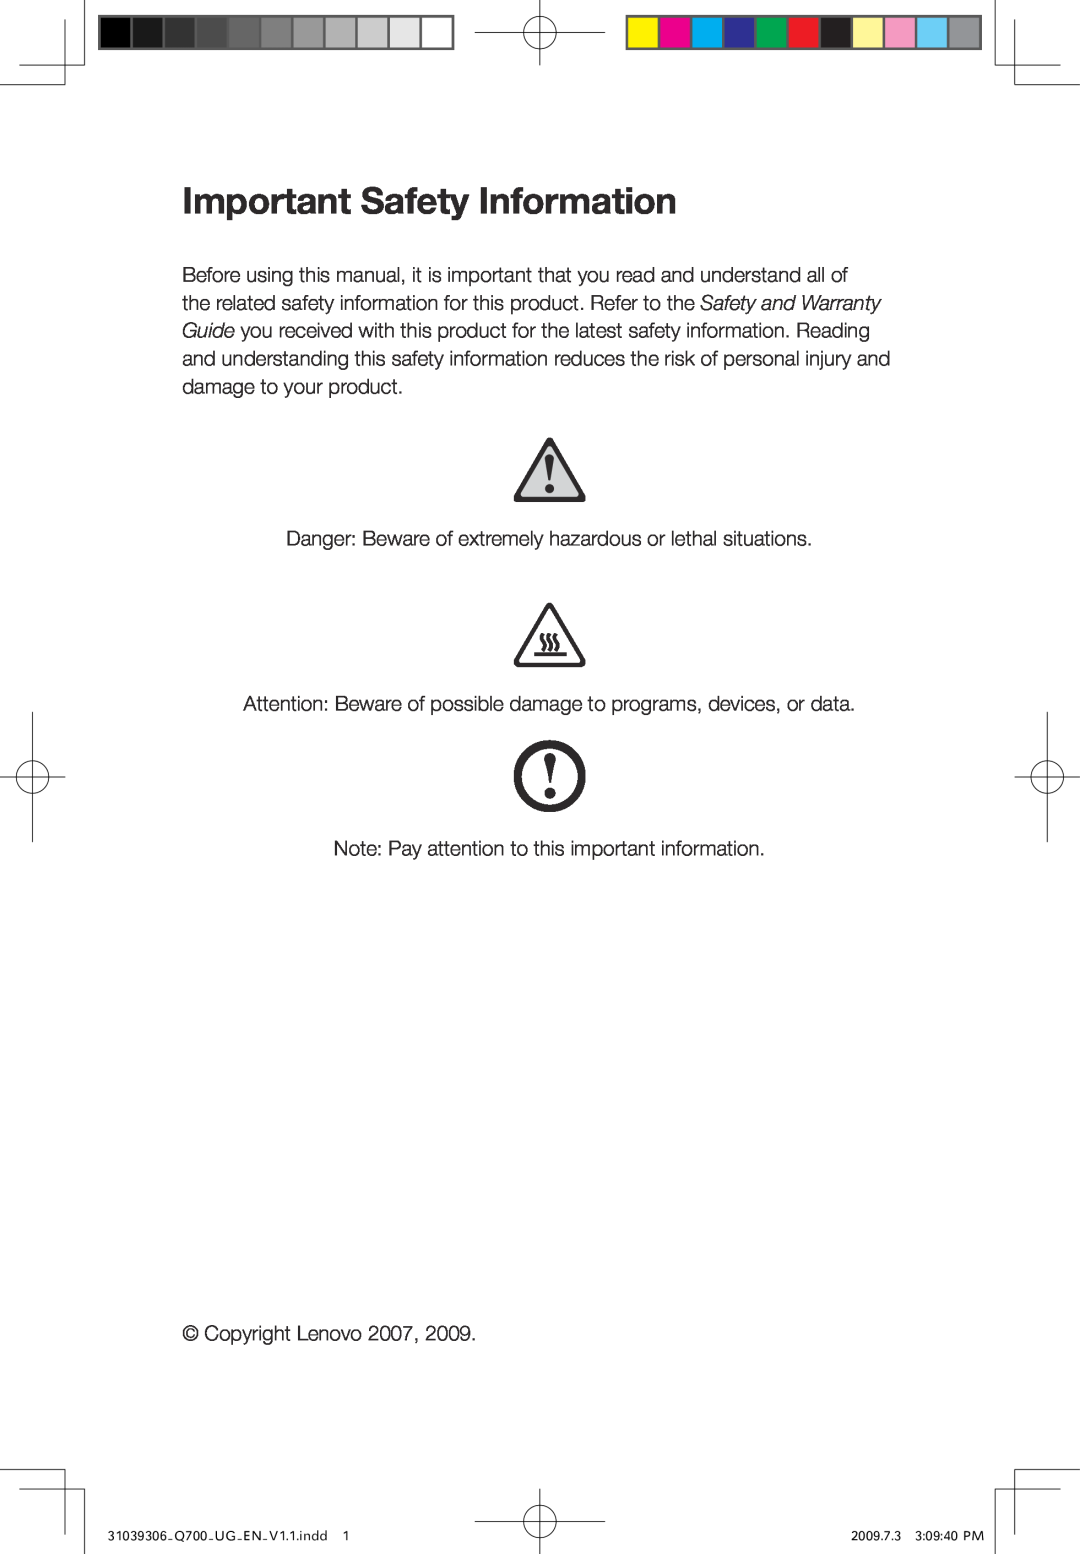 Lenovo Q700 manual Important Safety Information 